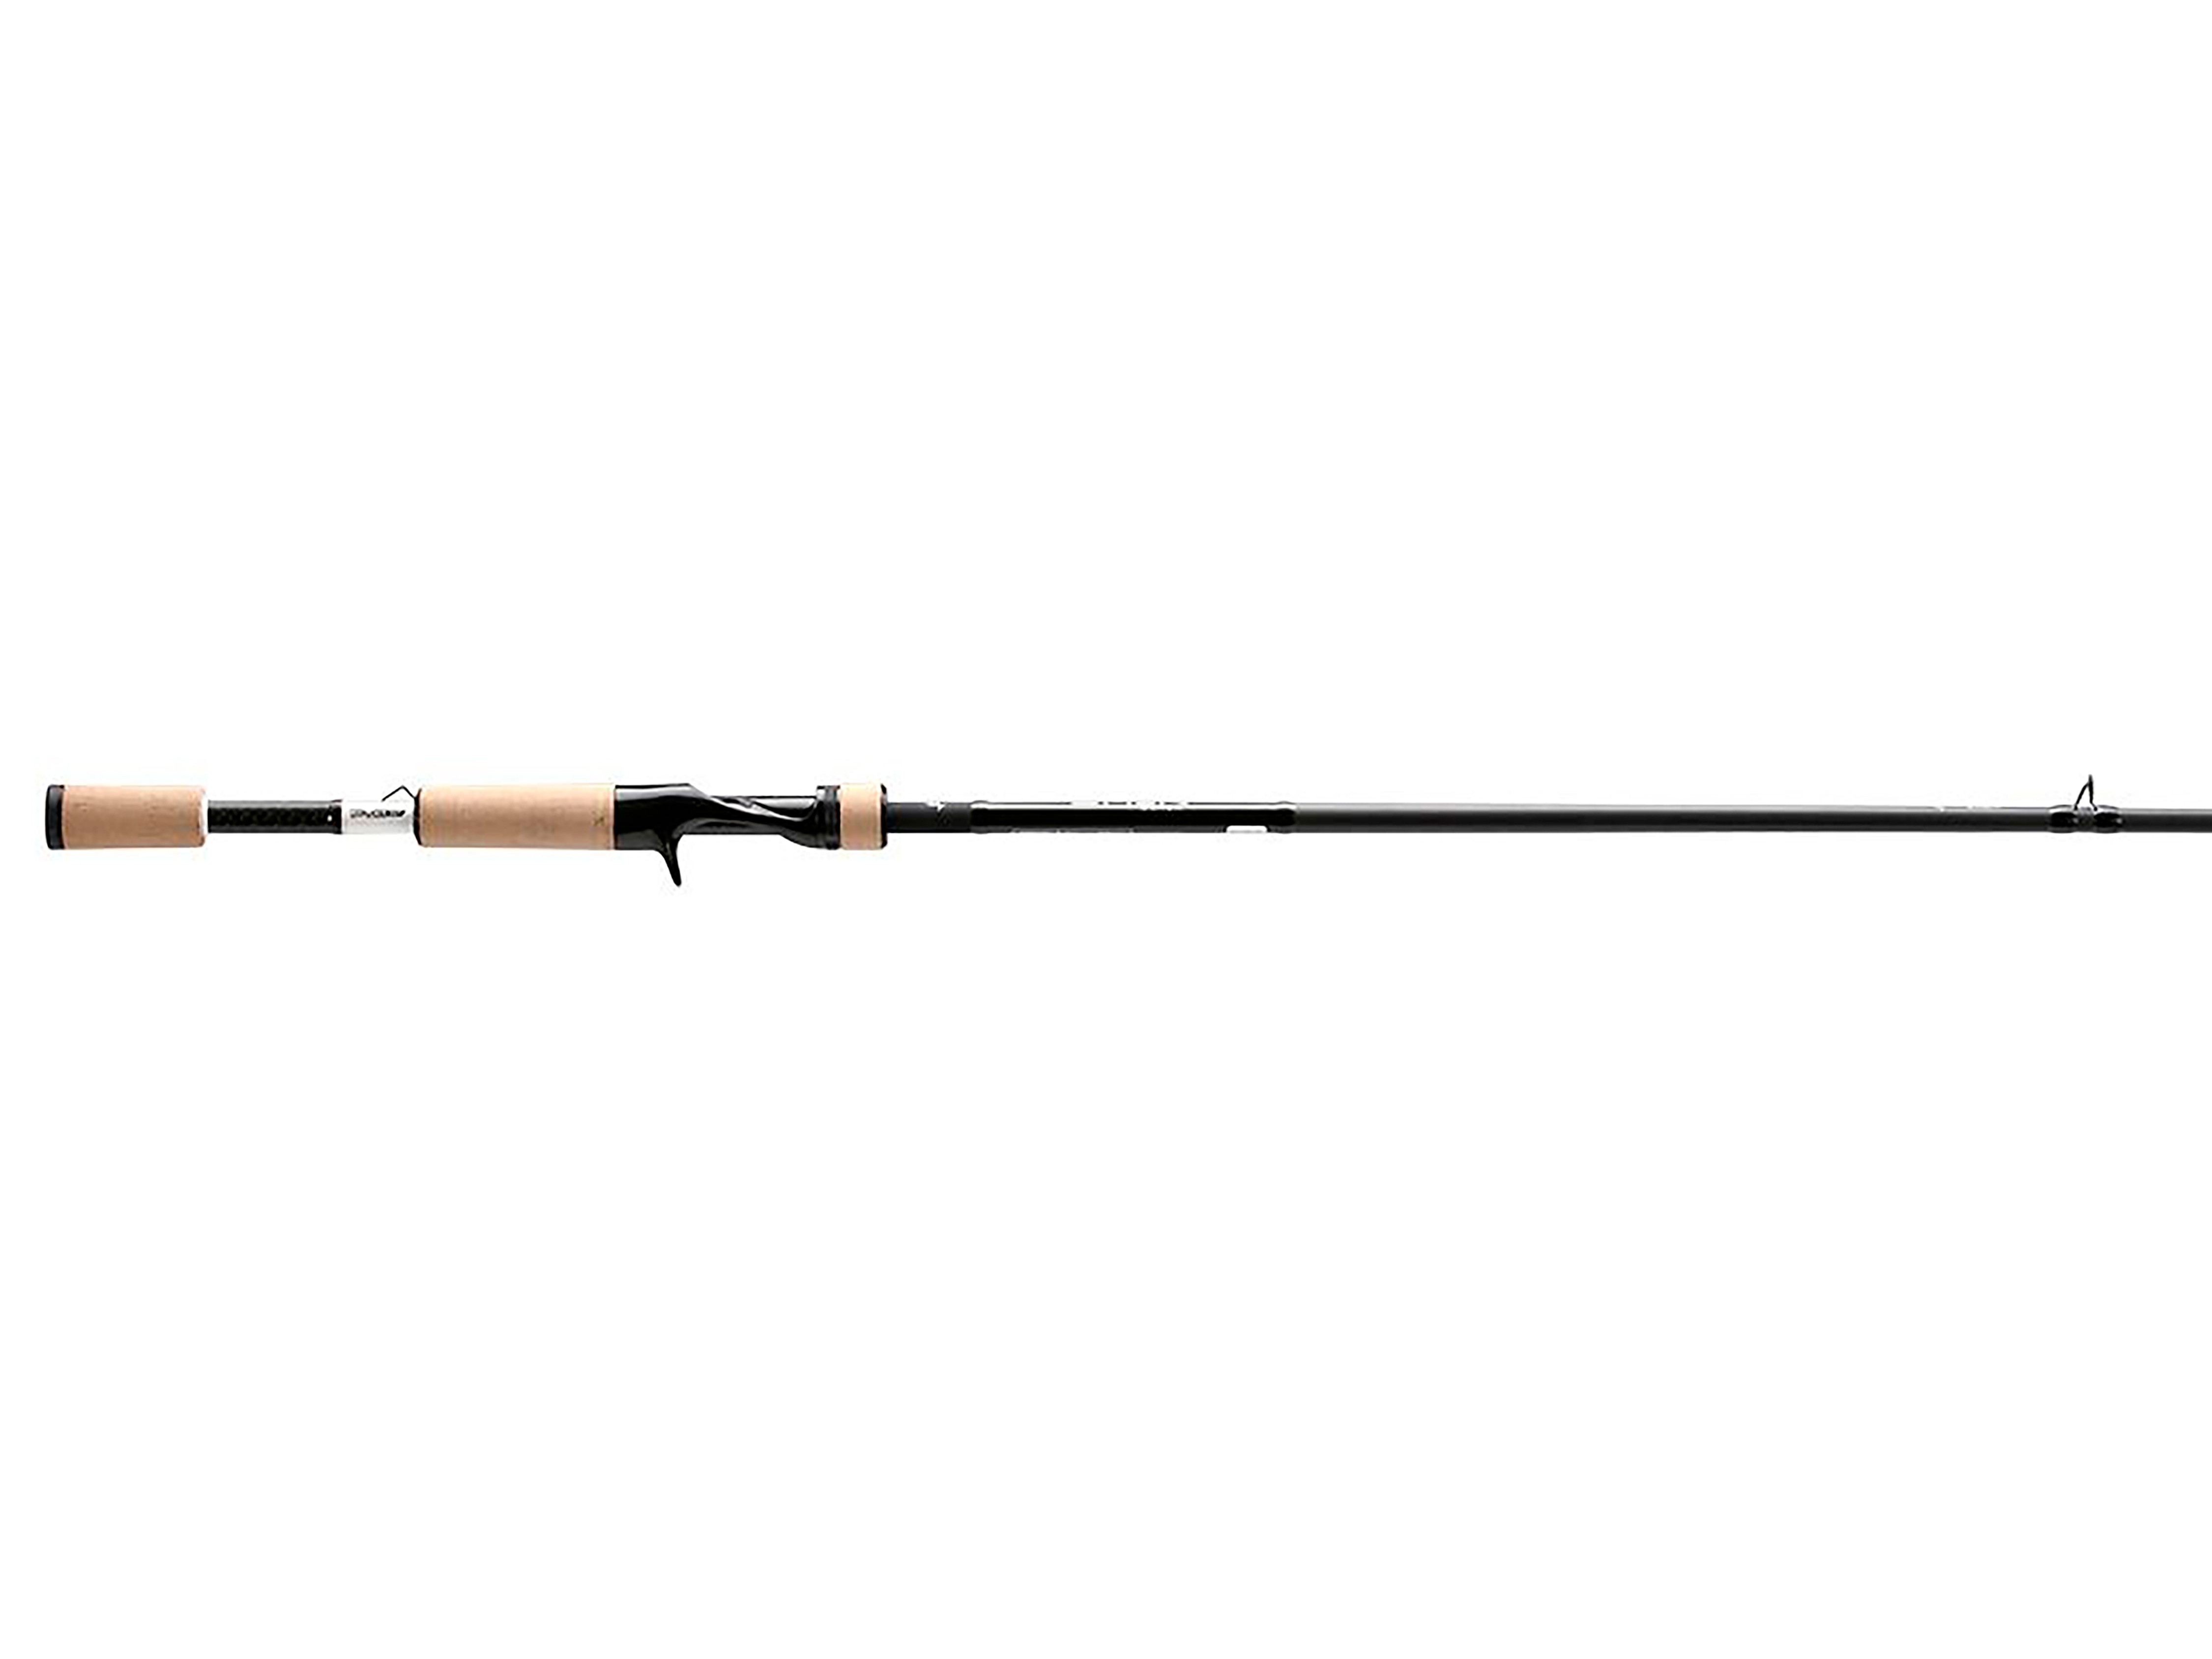 13 FISHING - Omen Black - Baitcast Fishing Rods 7'4 H (Heavy) - 1